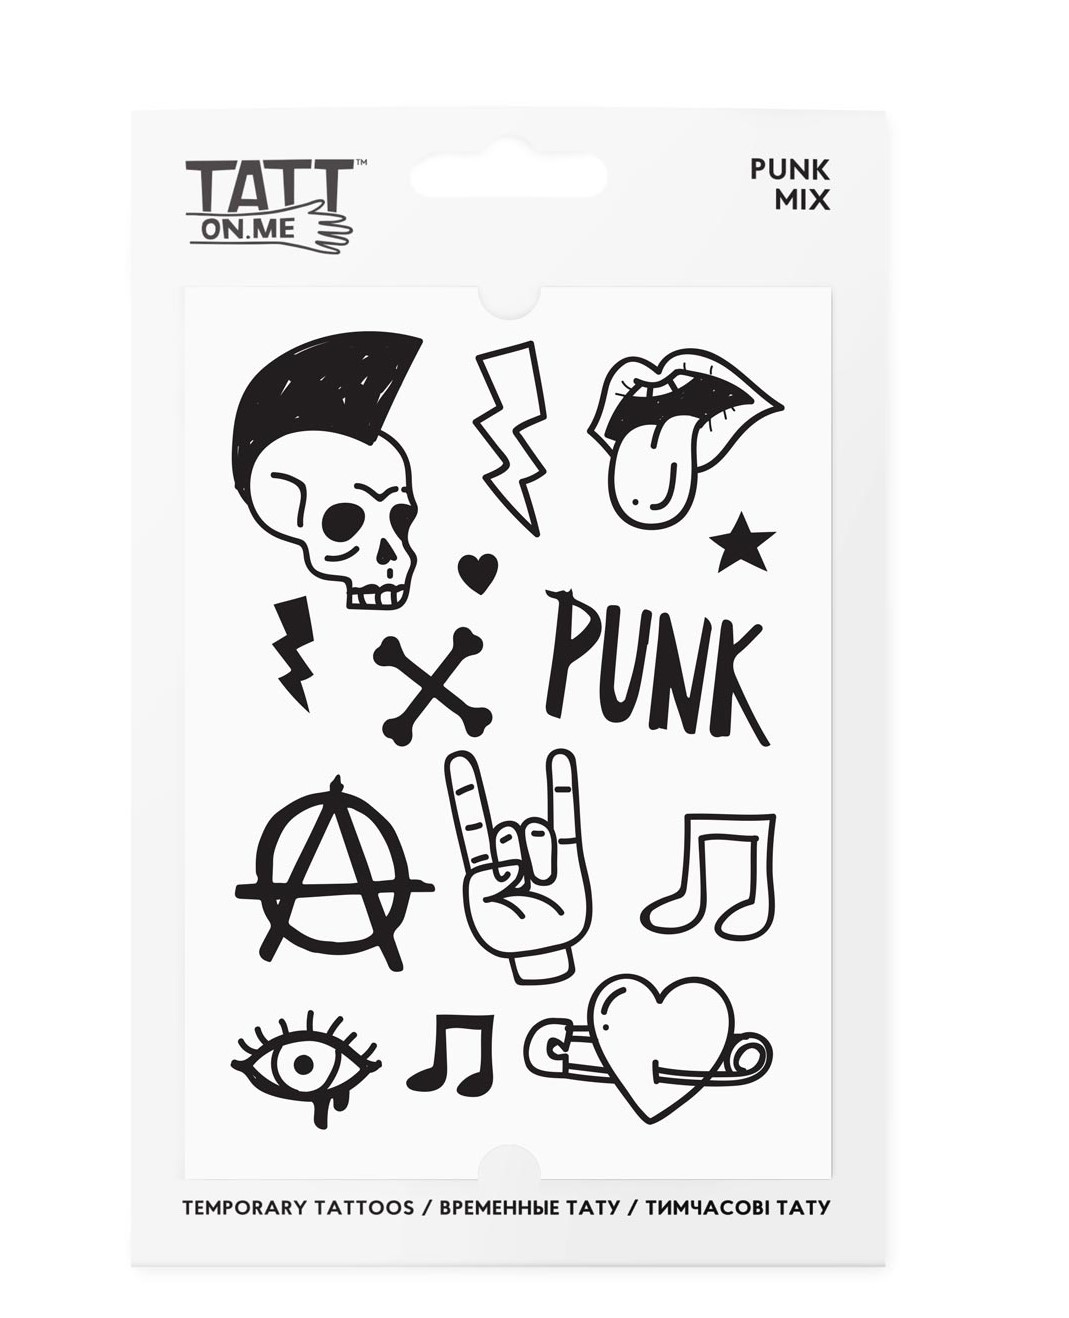 Tatuaje temporare - Punk Mix | Tatton.me